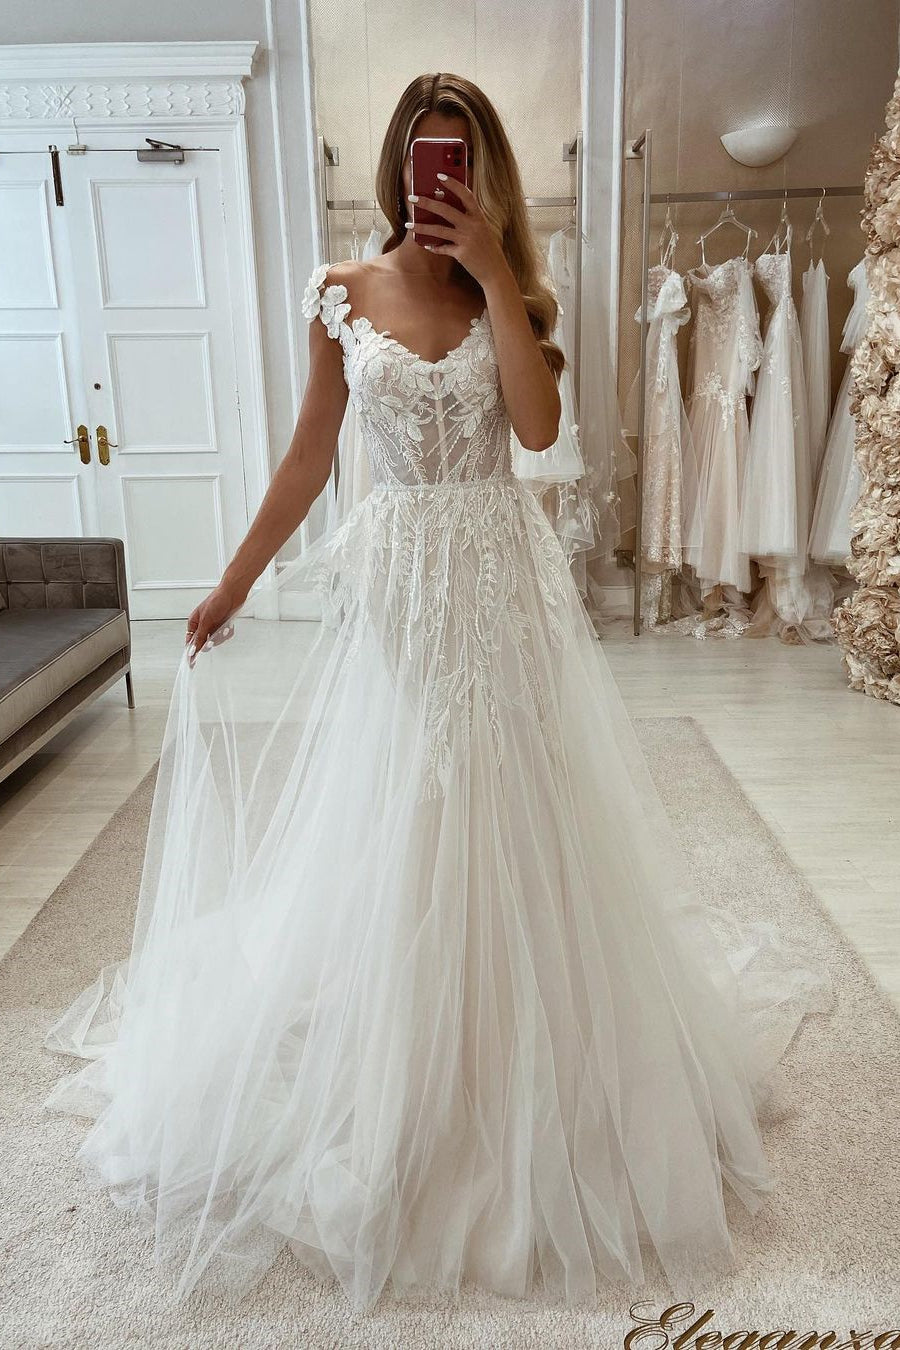 Suzhoufashion New Arrival Tulle Sleeveless Lace Floor length Bridal Dresses